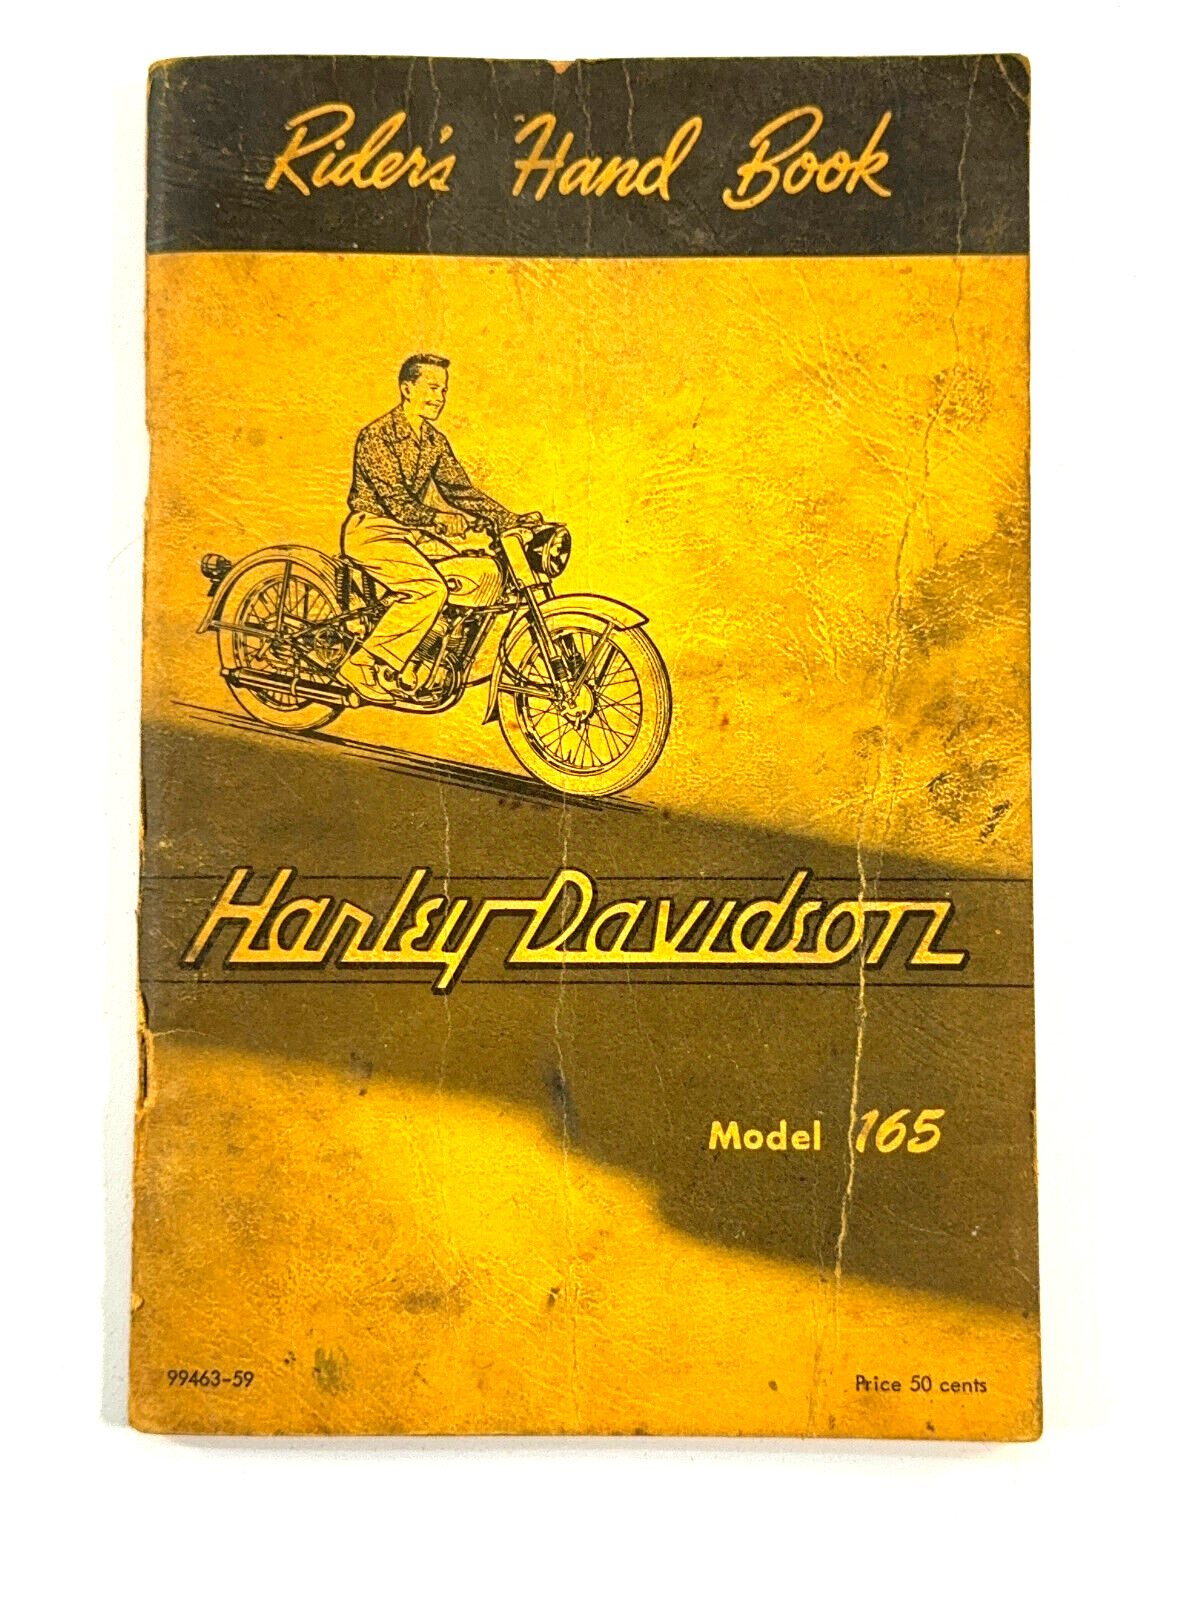 vtg 1958 Harley Davidson Rider's Handbook Model 165 motorcycle 